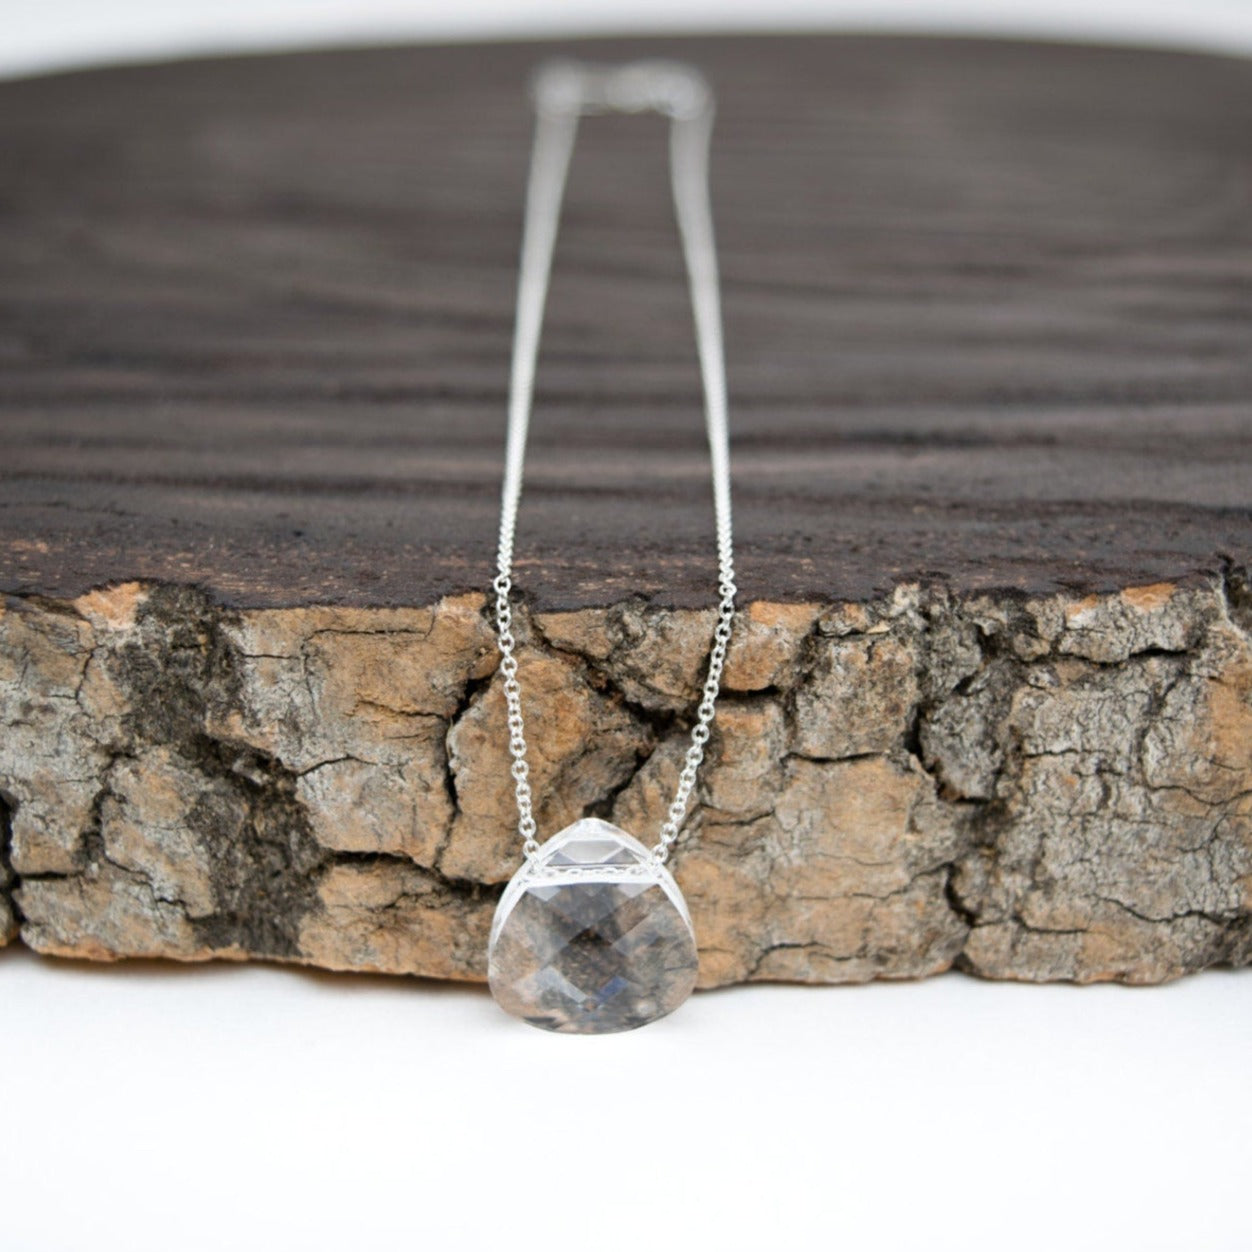 Ashley Swarovski crystal pendant necklace in sterling silver